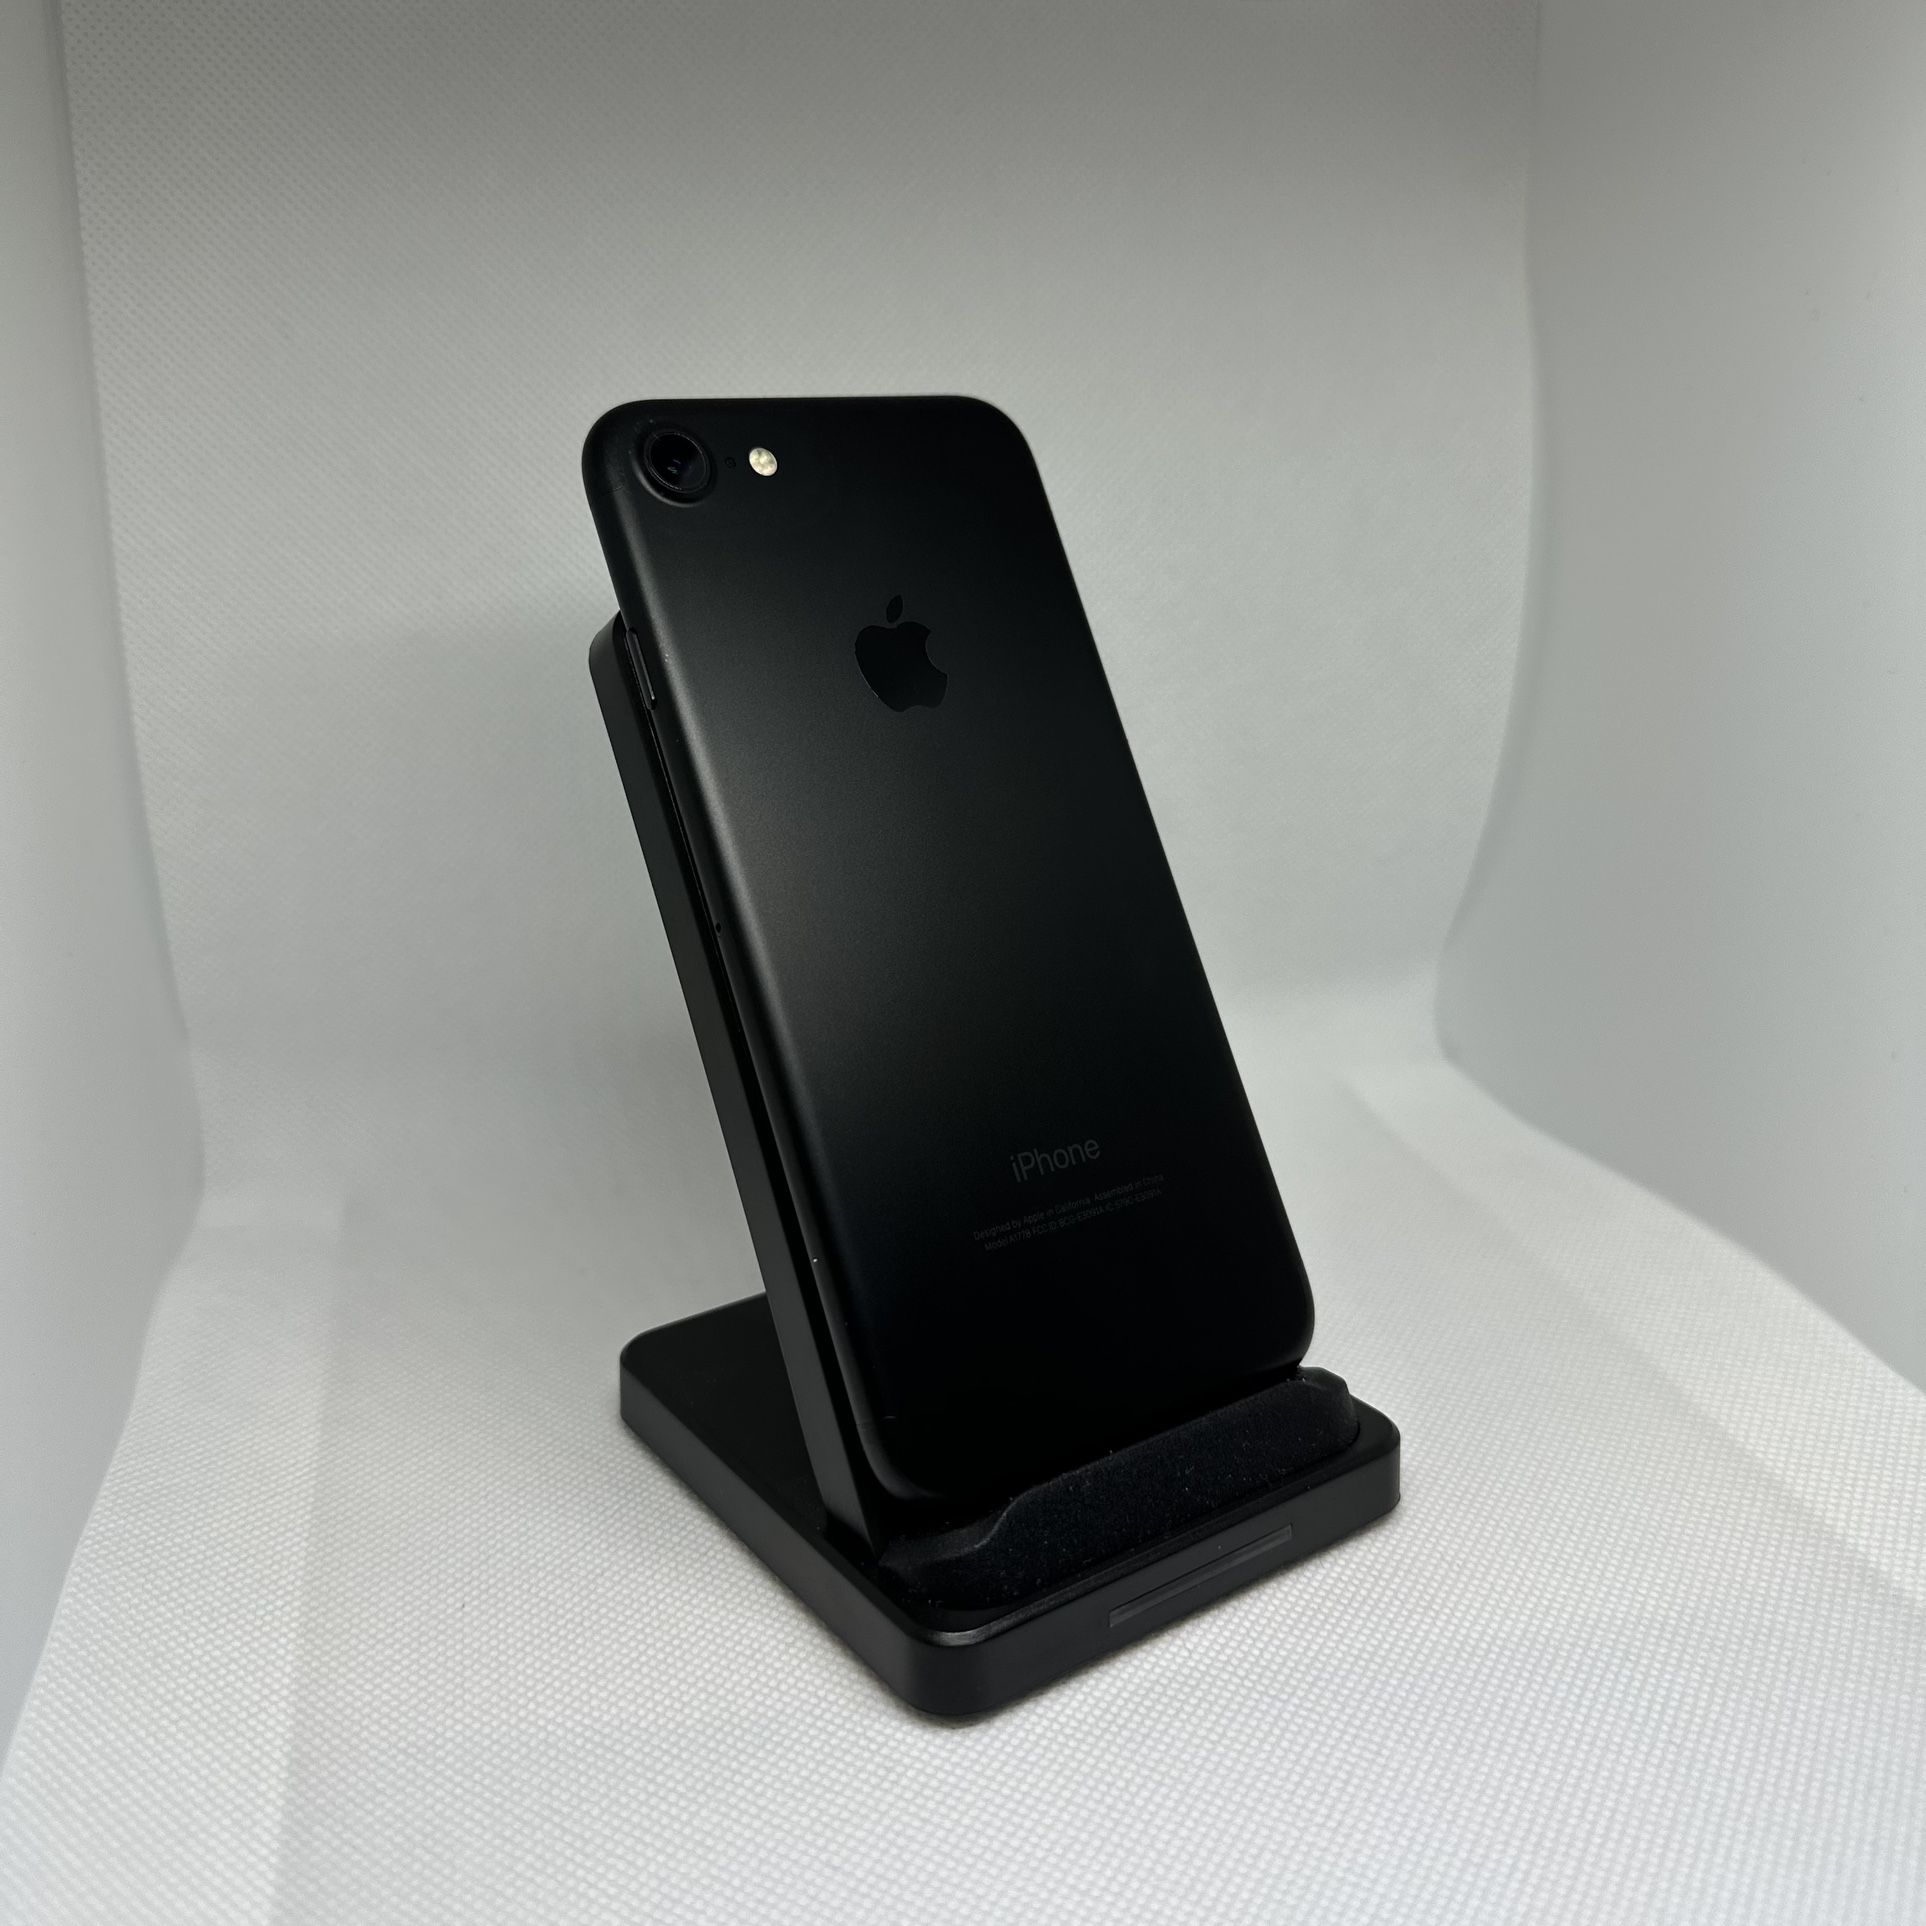 Apple iPhone 7 Black 32G